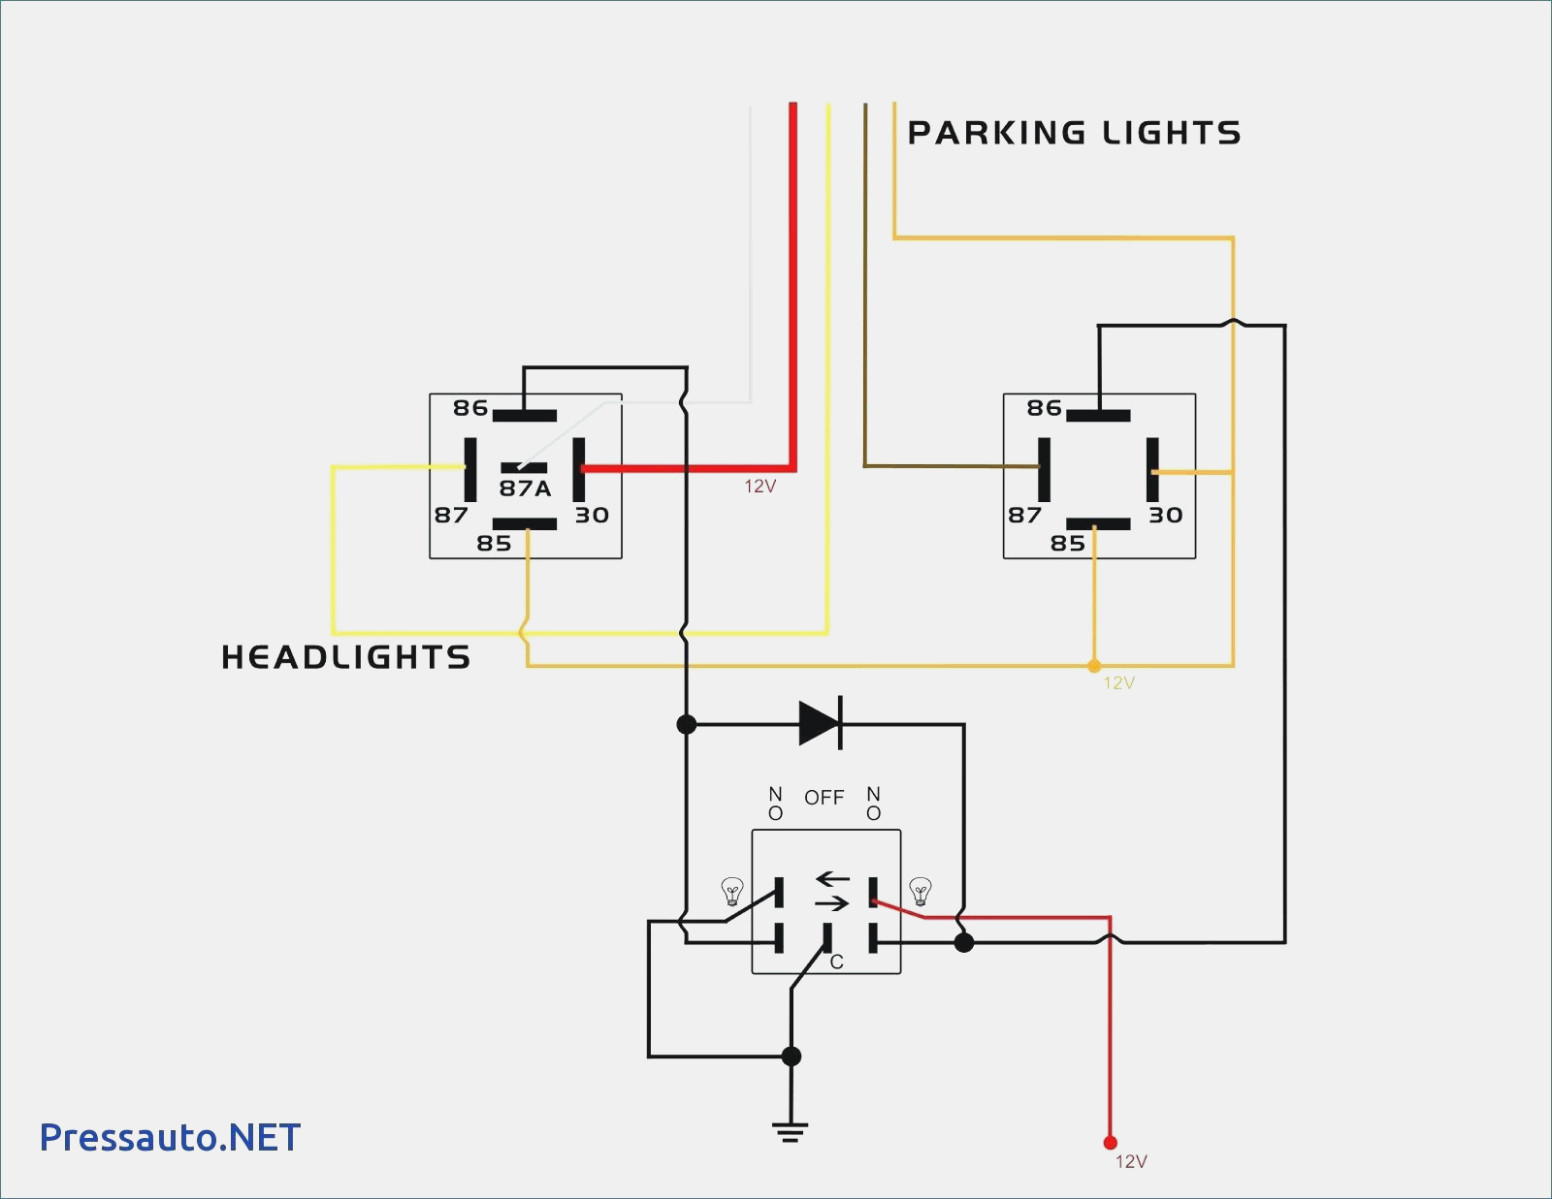 Bennett Trim Tabs Wiring Diagrams | Manual E-Books - Bennett Trim Tab Wiring Diagram